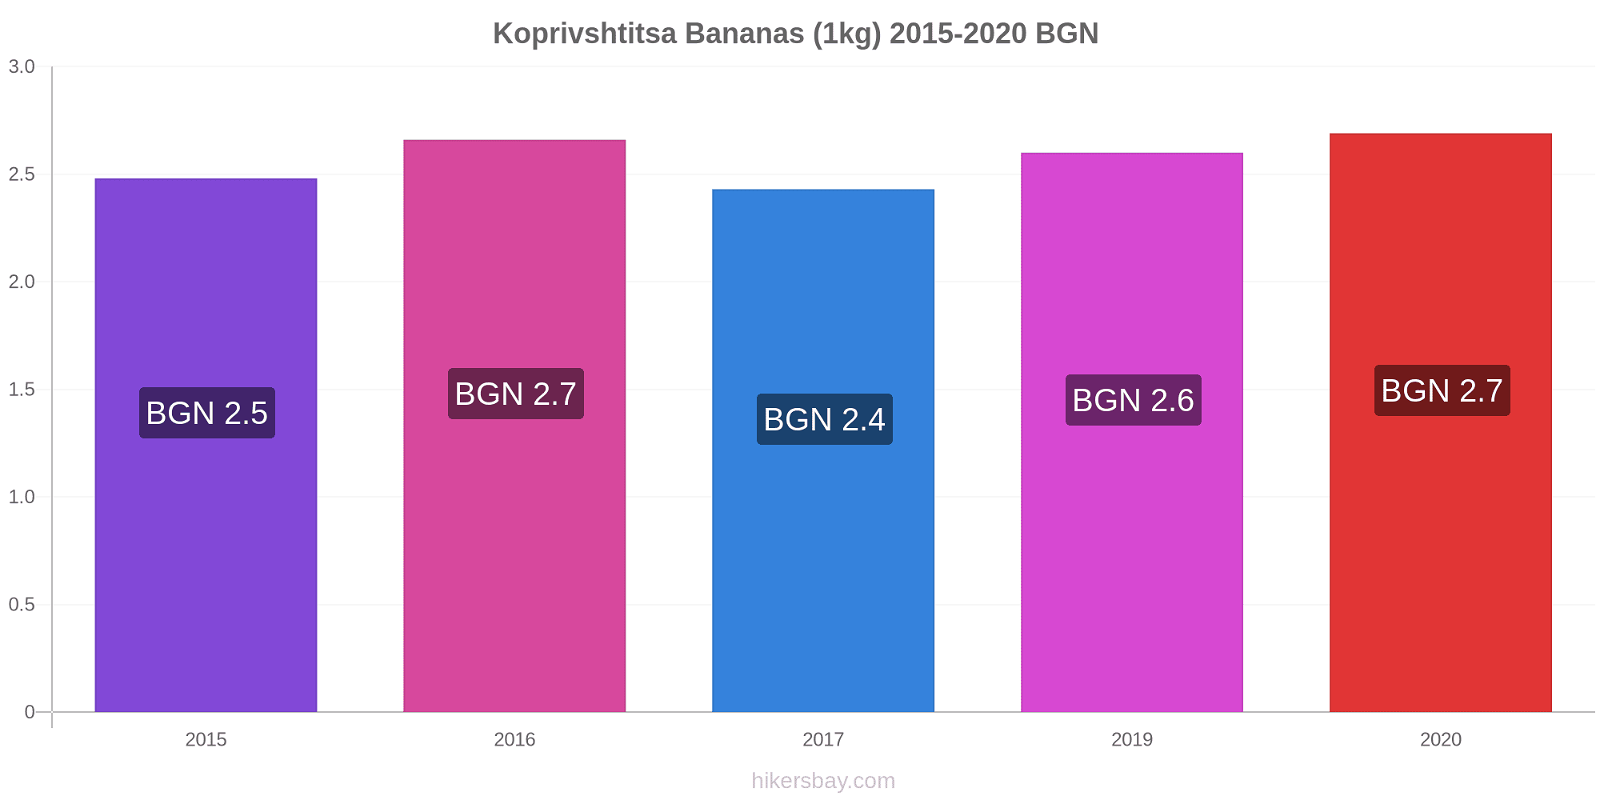 Koprivshtitsa price changes Bananas (1kg) hikersbay.com